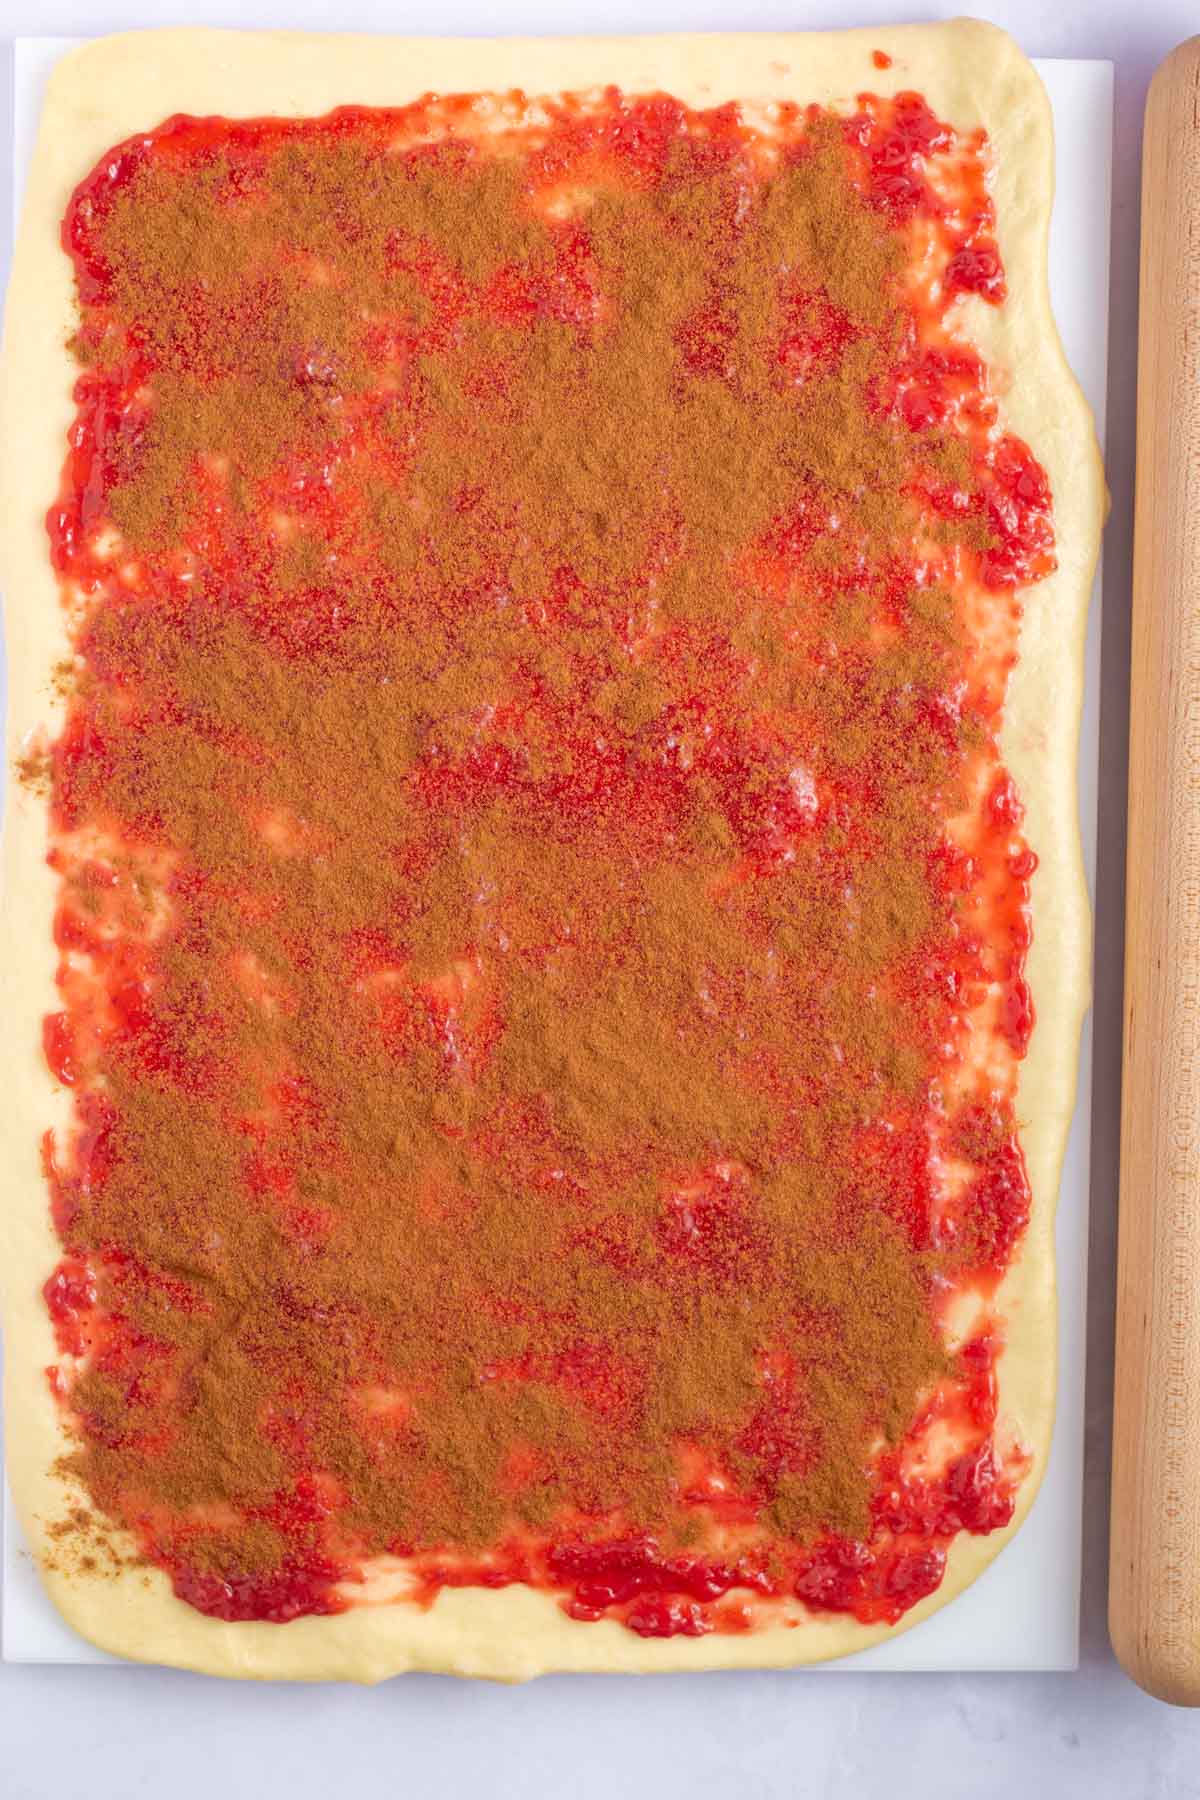 strawberry jam and cinnamon spread over dough